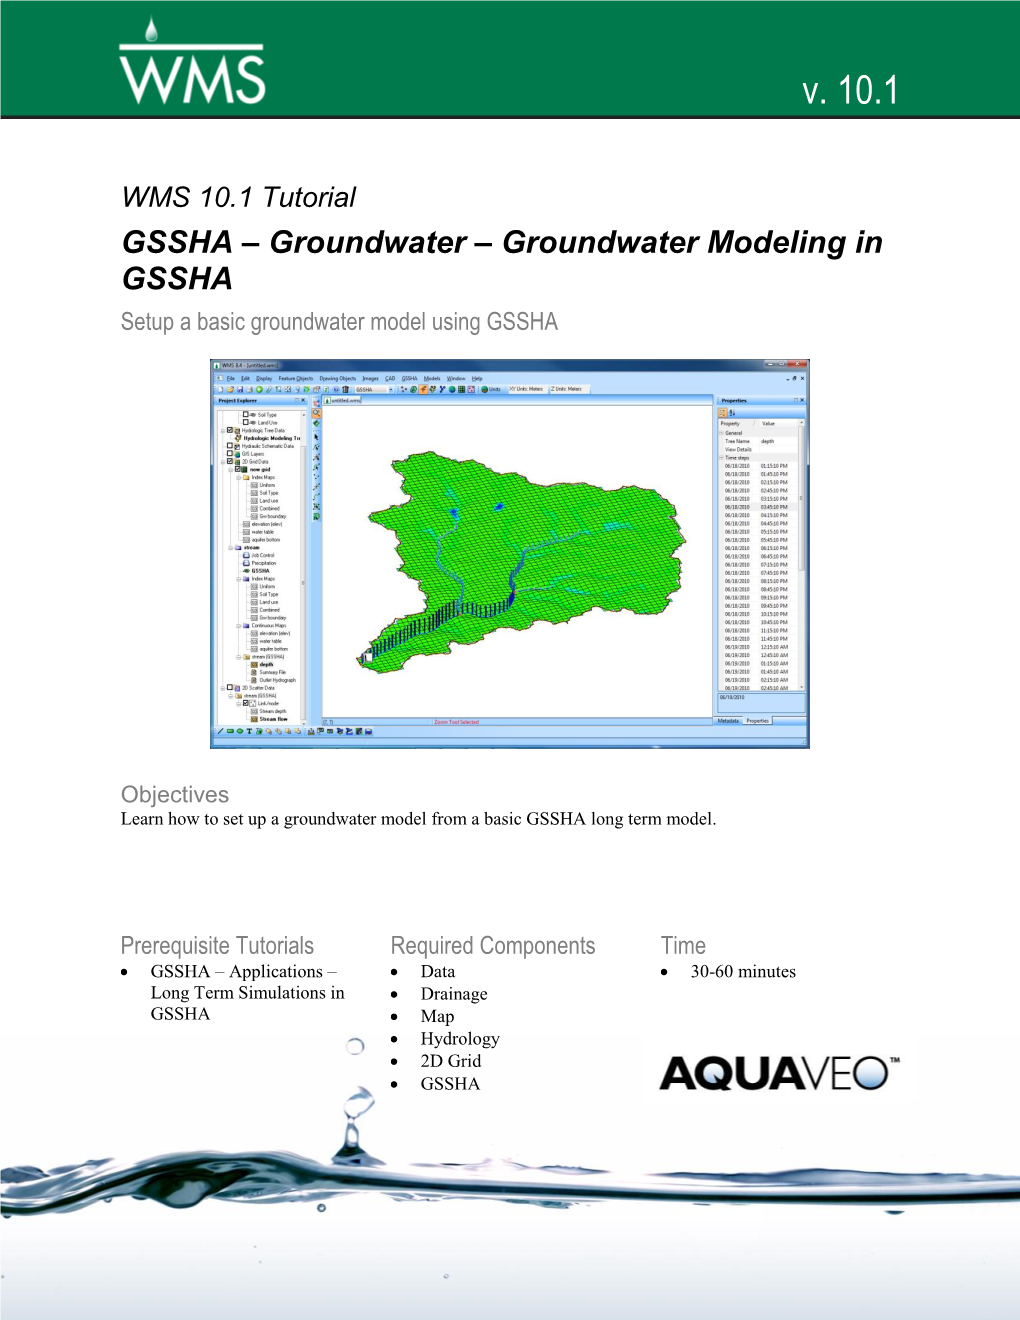 Groundwater Modeling in GSSHA Setup a Basic Groundwater Model Using GSSHA